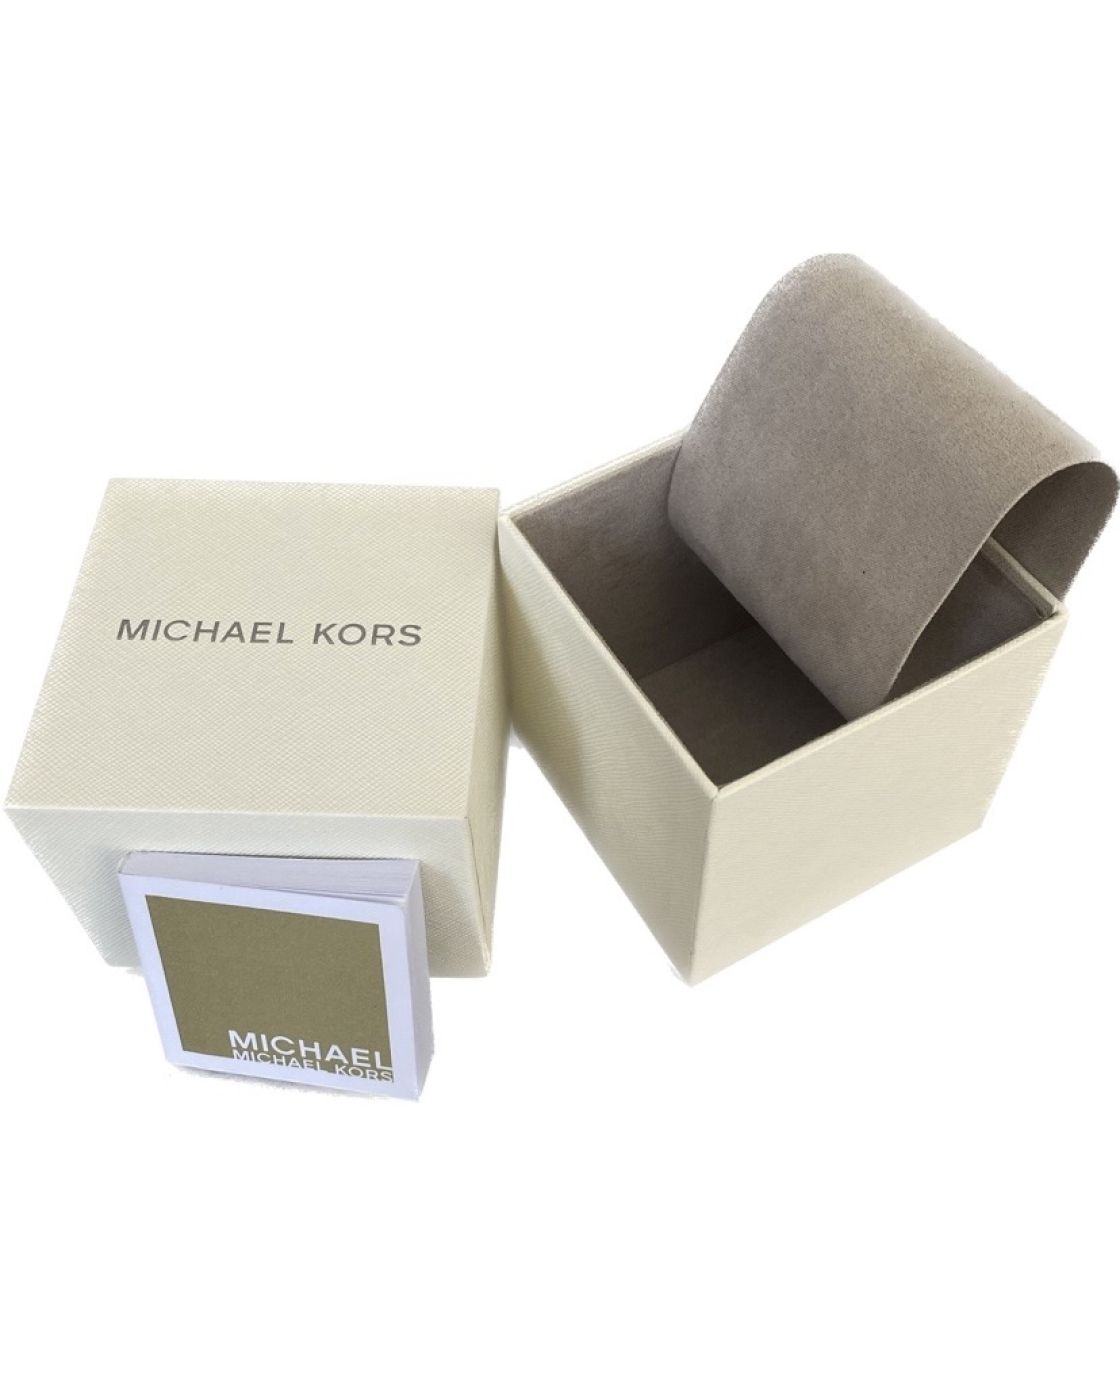 Michael Kors Slim Runway Chronograph | MK9060 Clachic